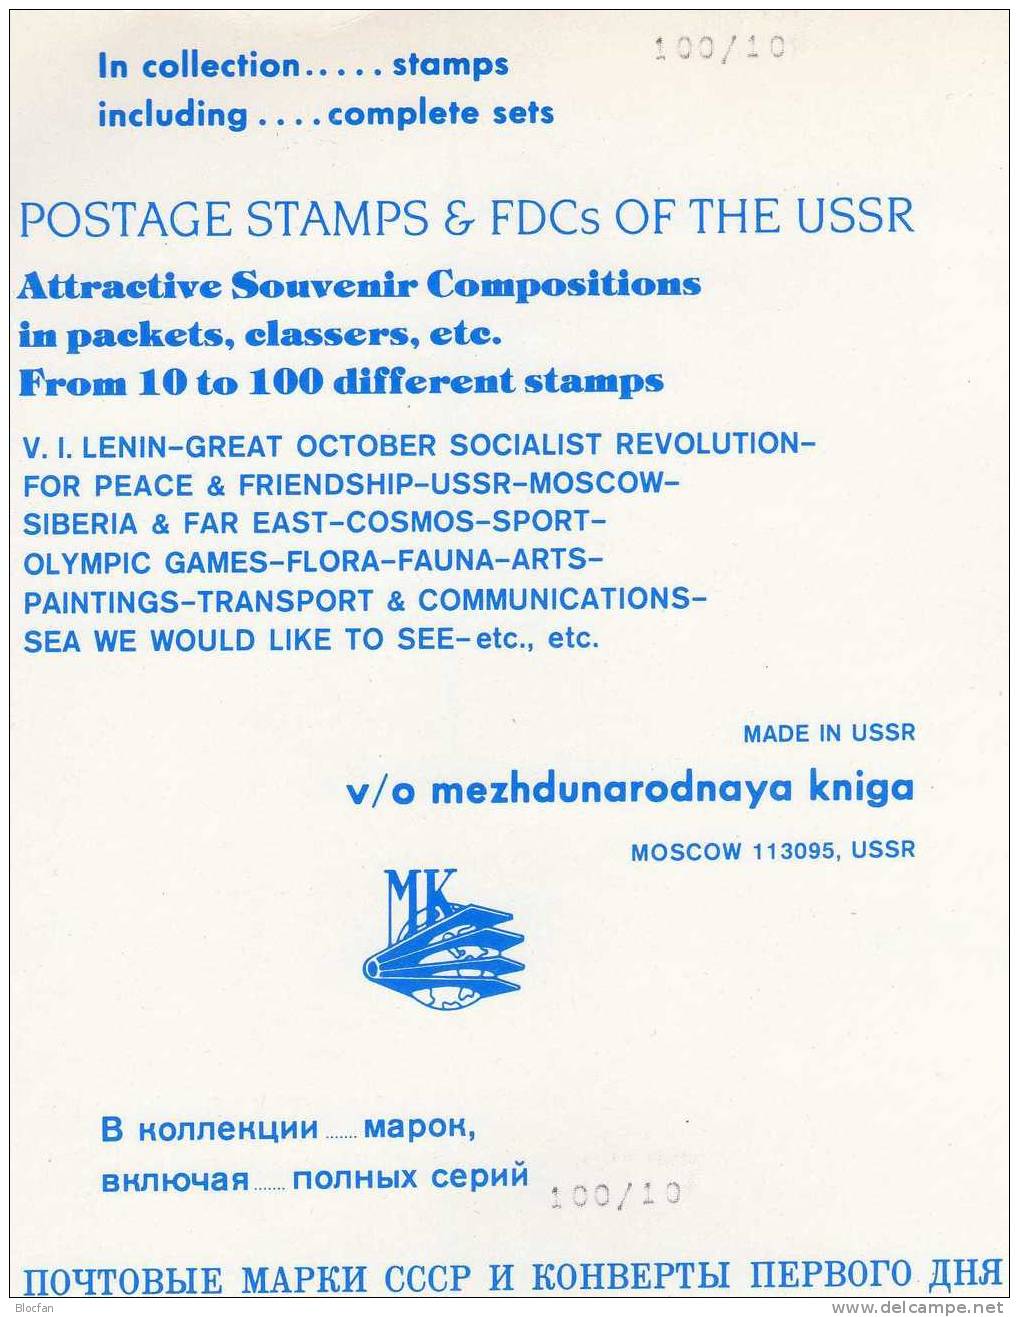 Raumfahrt Erde Satellit Kosmos Tag der Kosmonautik Sowjetunion Heft 1/90 o 50€ Raumschiff book space set of USSR CCCP SU